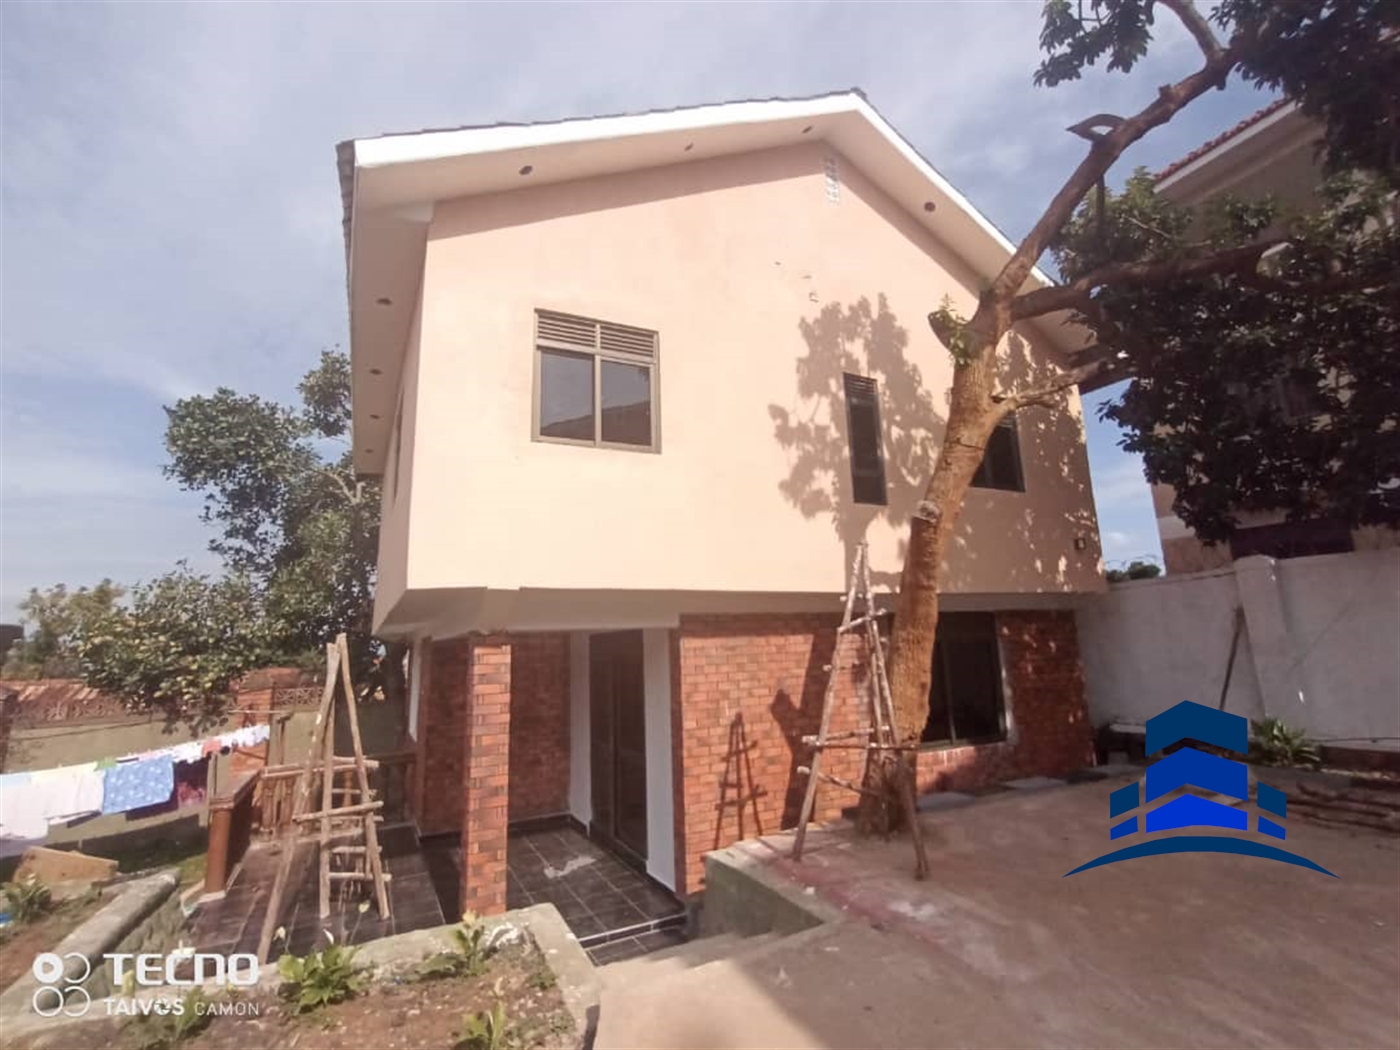 Villa for rent in Ggaba Kampala